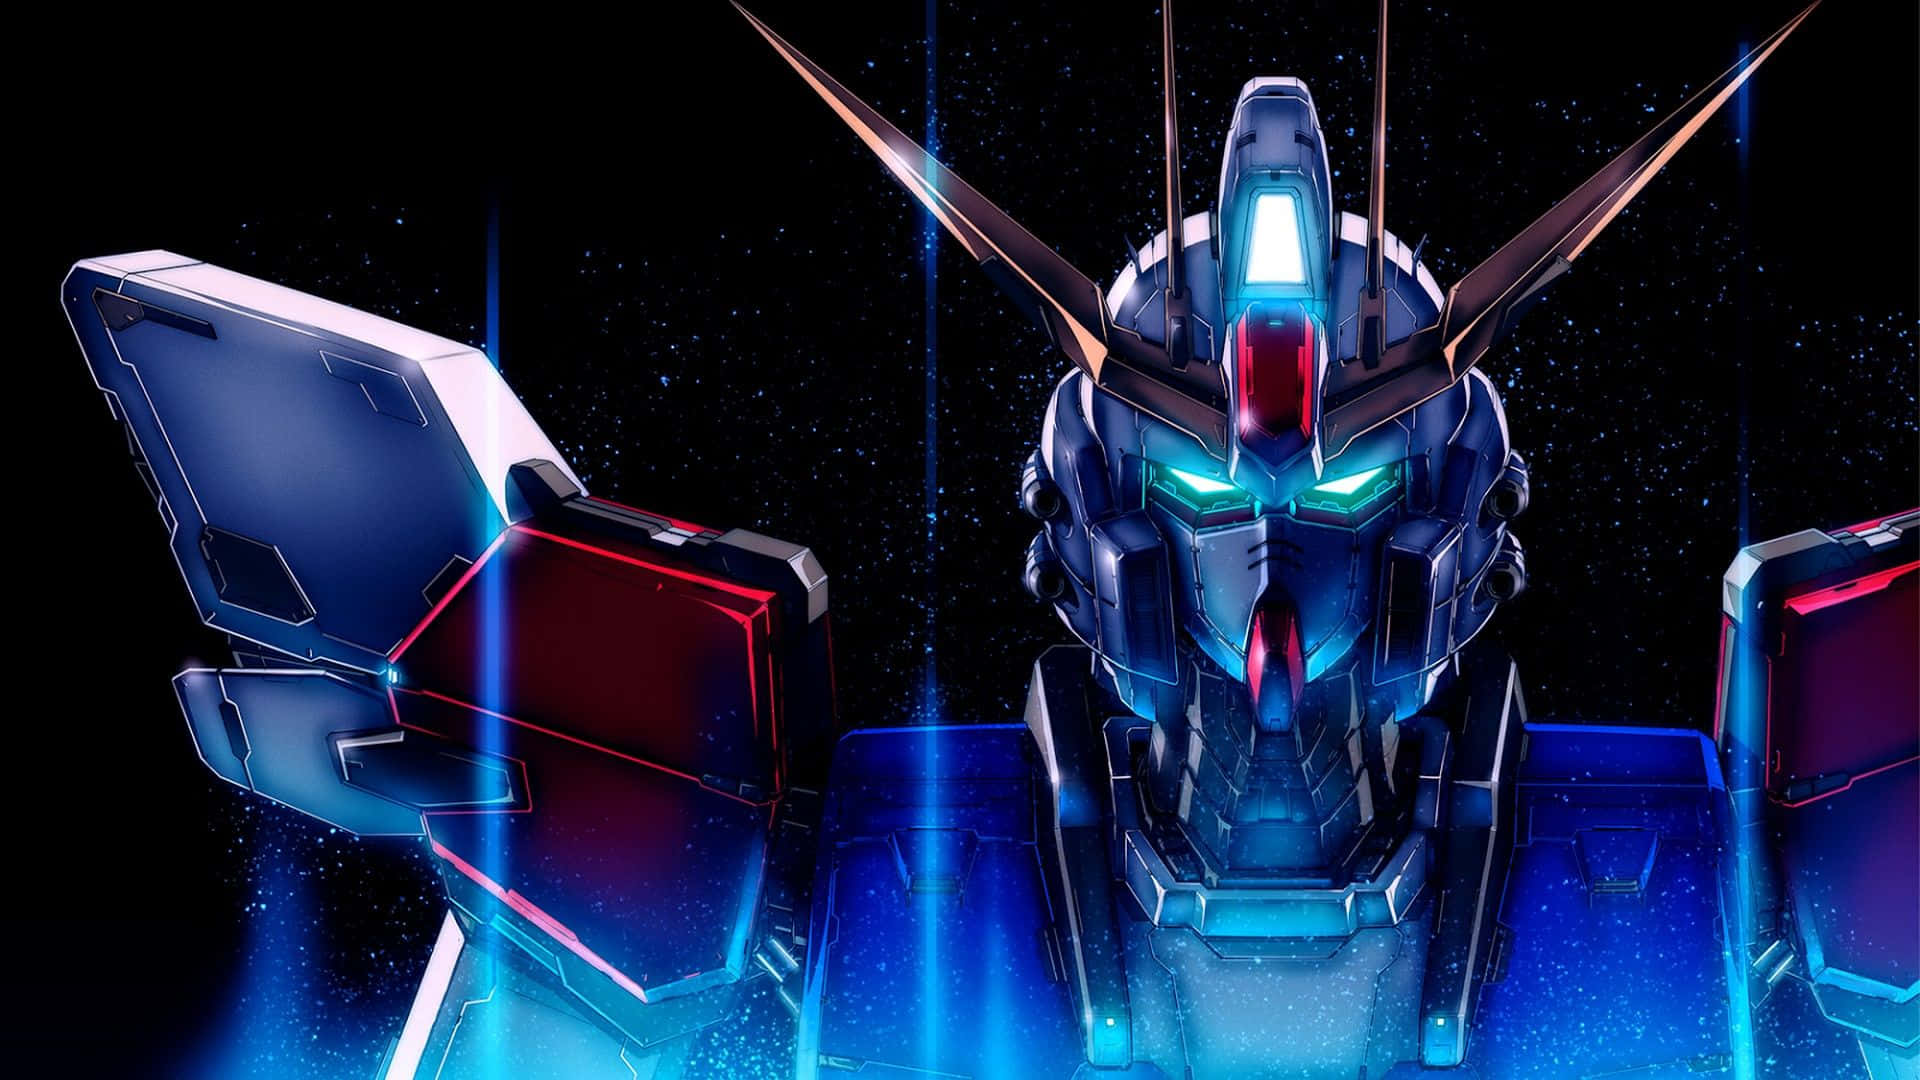 Download Glowing Gundam Desktop Wallpaper | Wallpapers.com